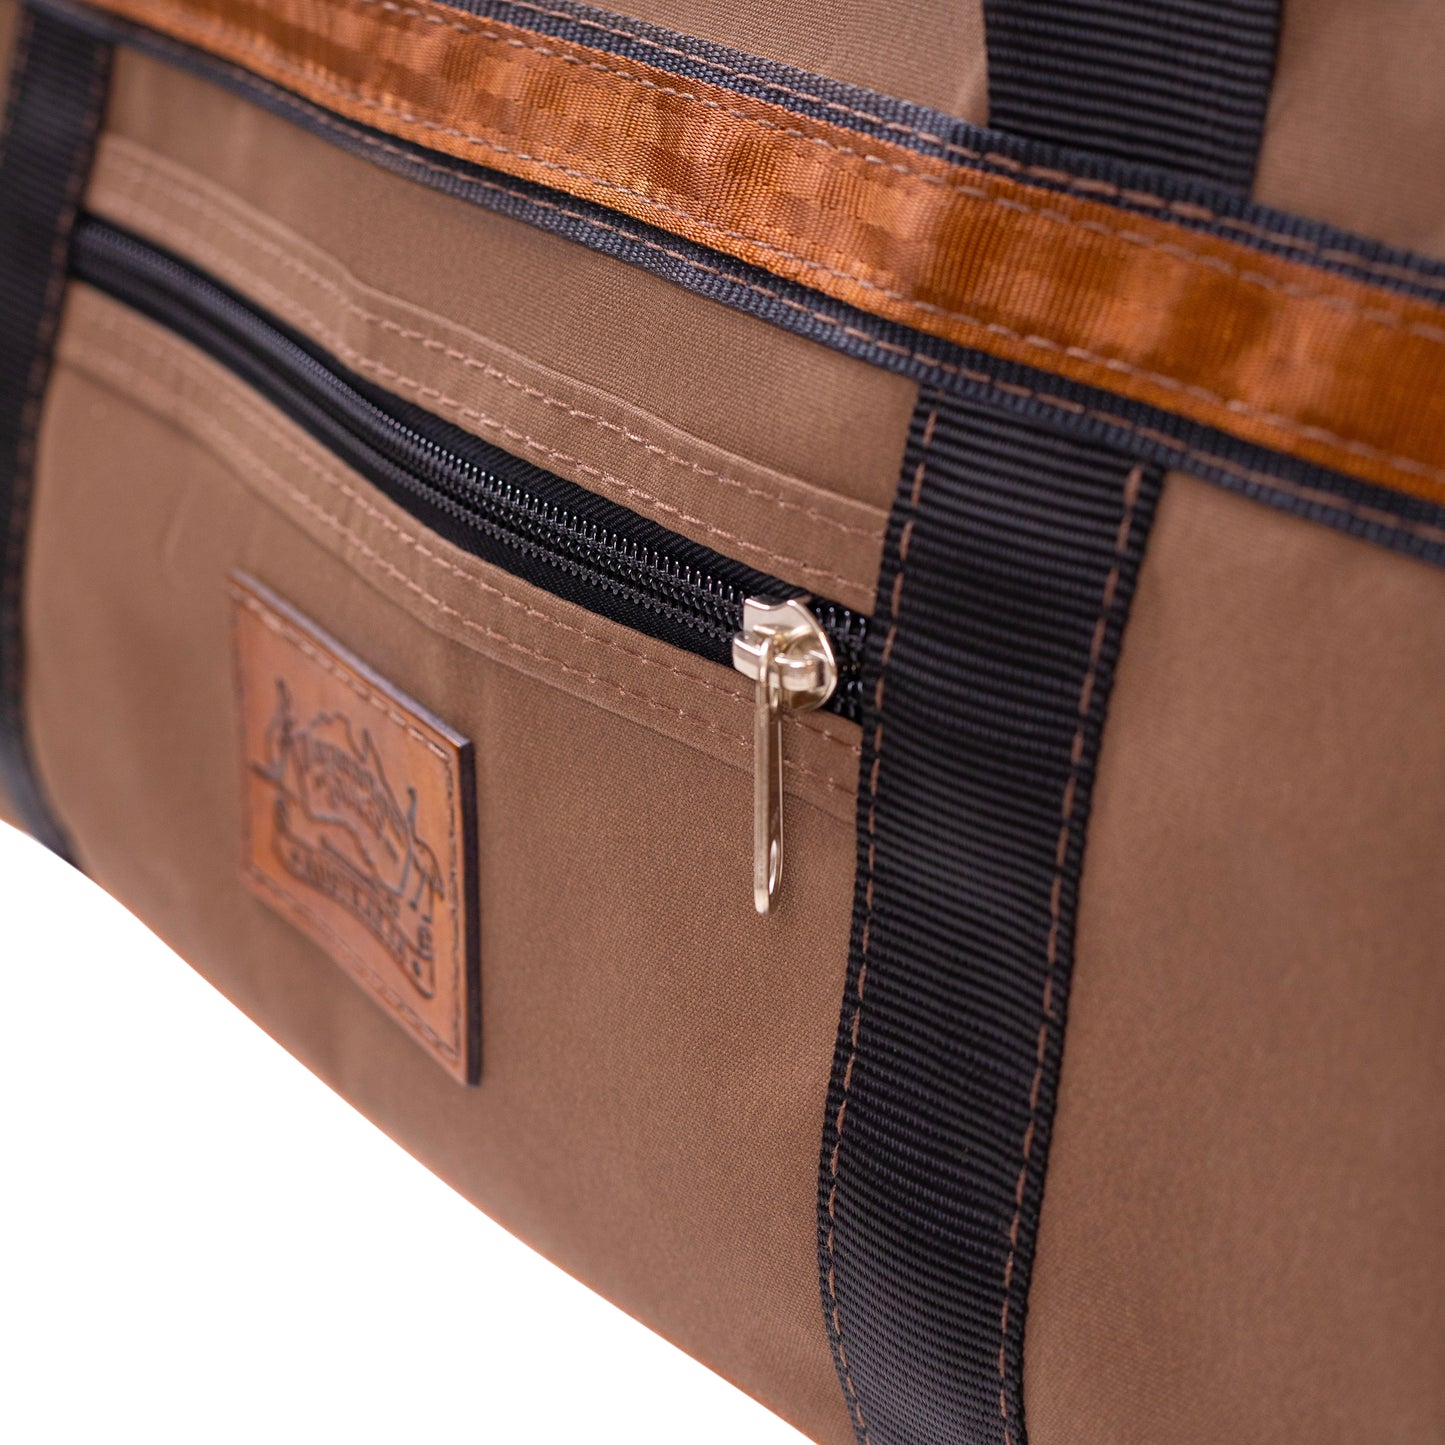 Antelope Brown Canvas Travel Bag. 